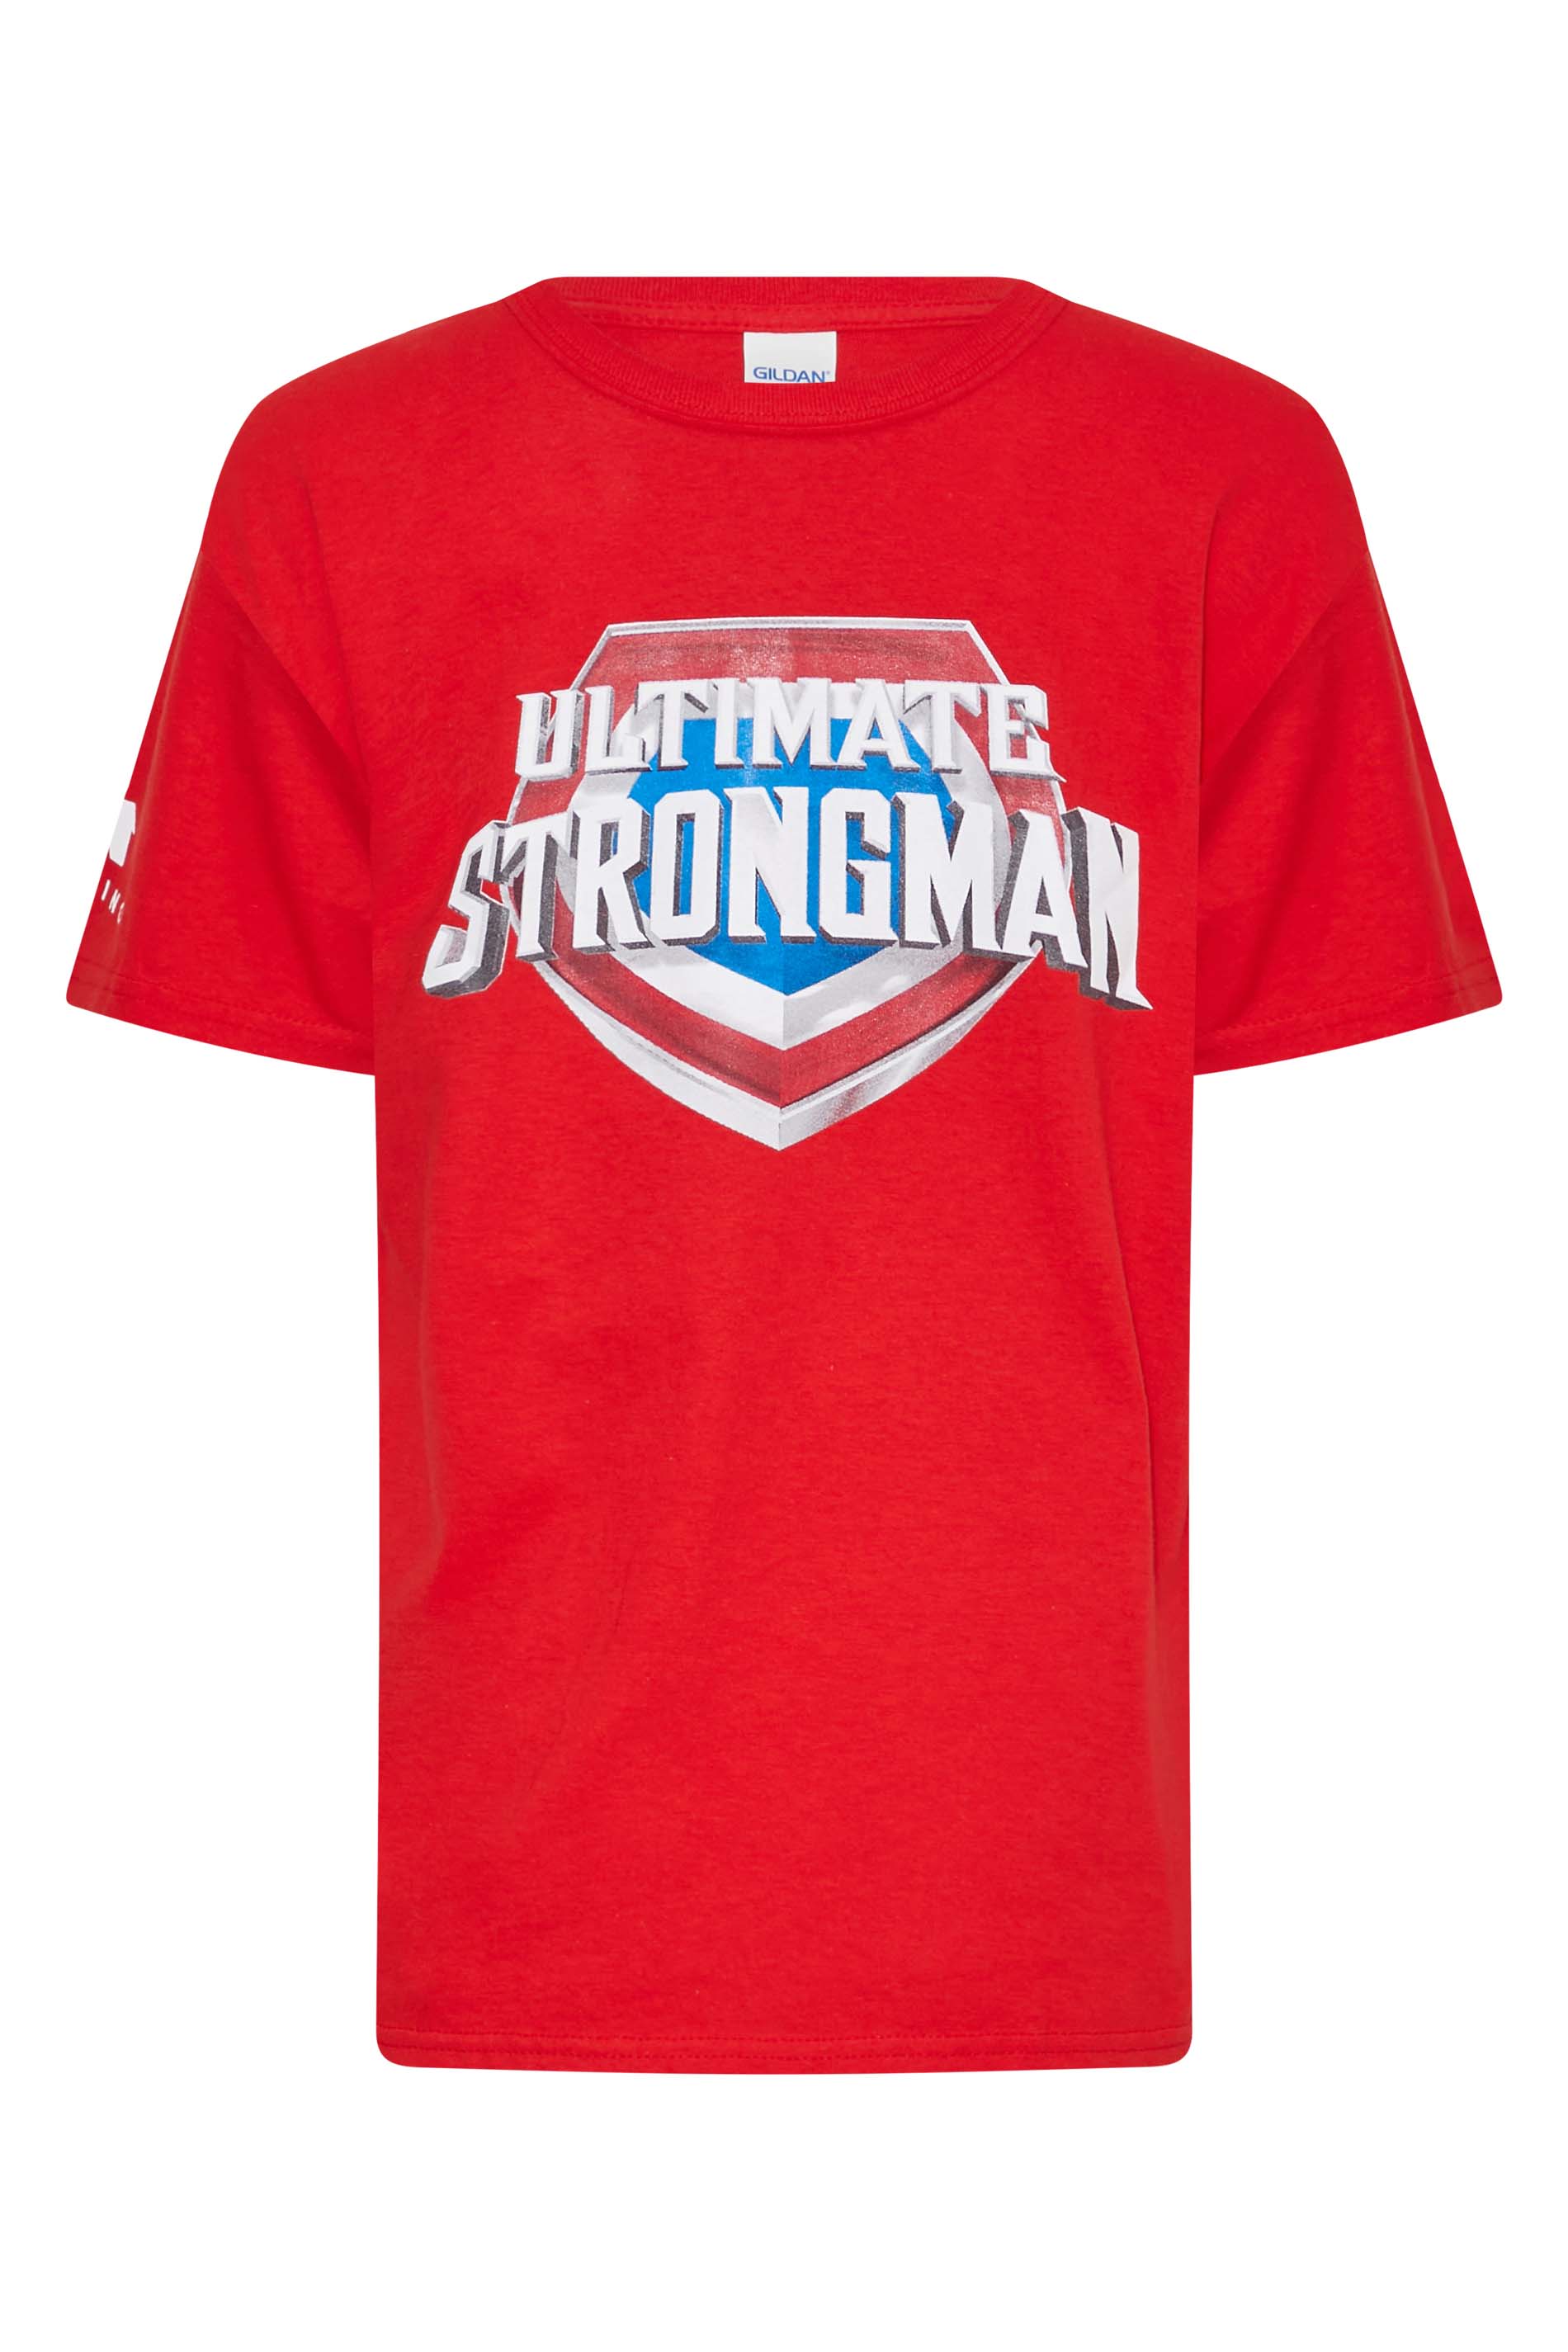 BadRhino Boys Red Ultimate Strongman T-Shirt 1